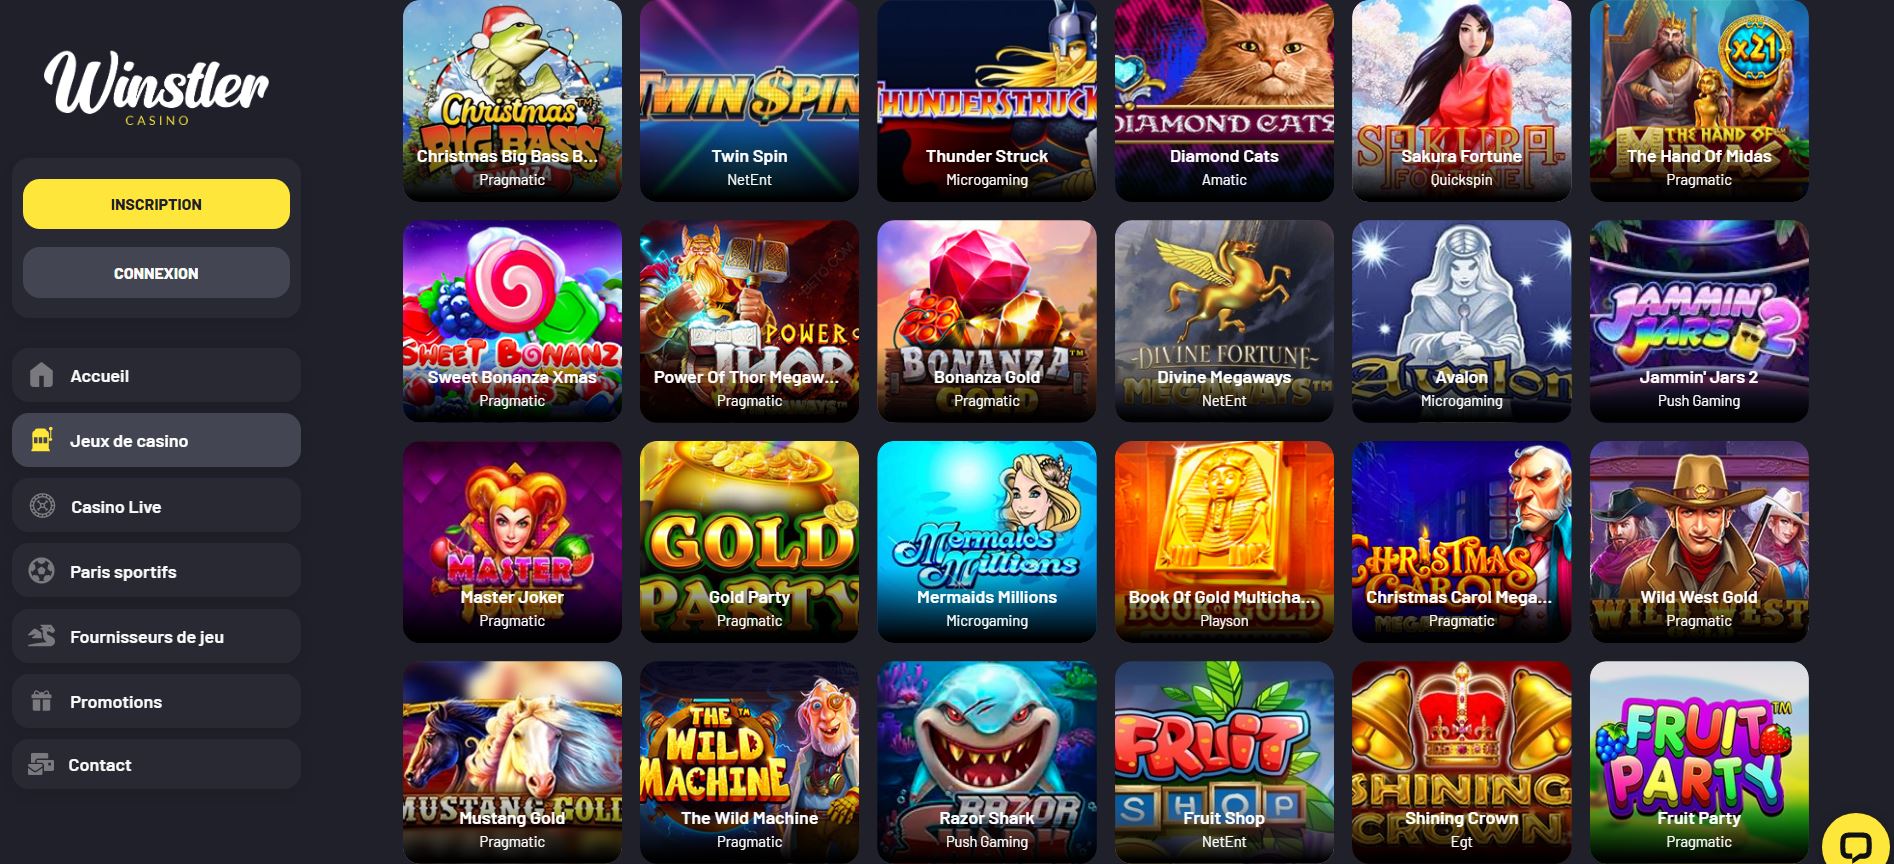 Winstler - Jeux - Crypto casino